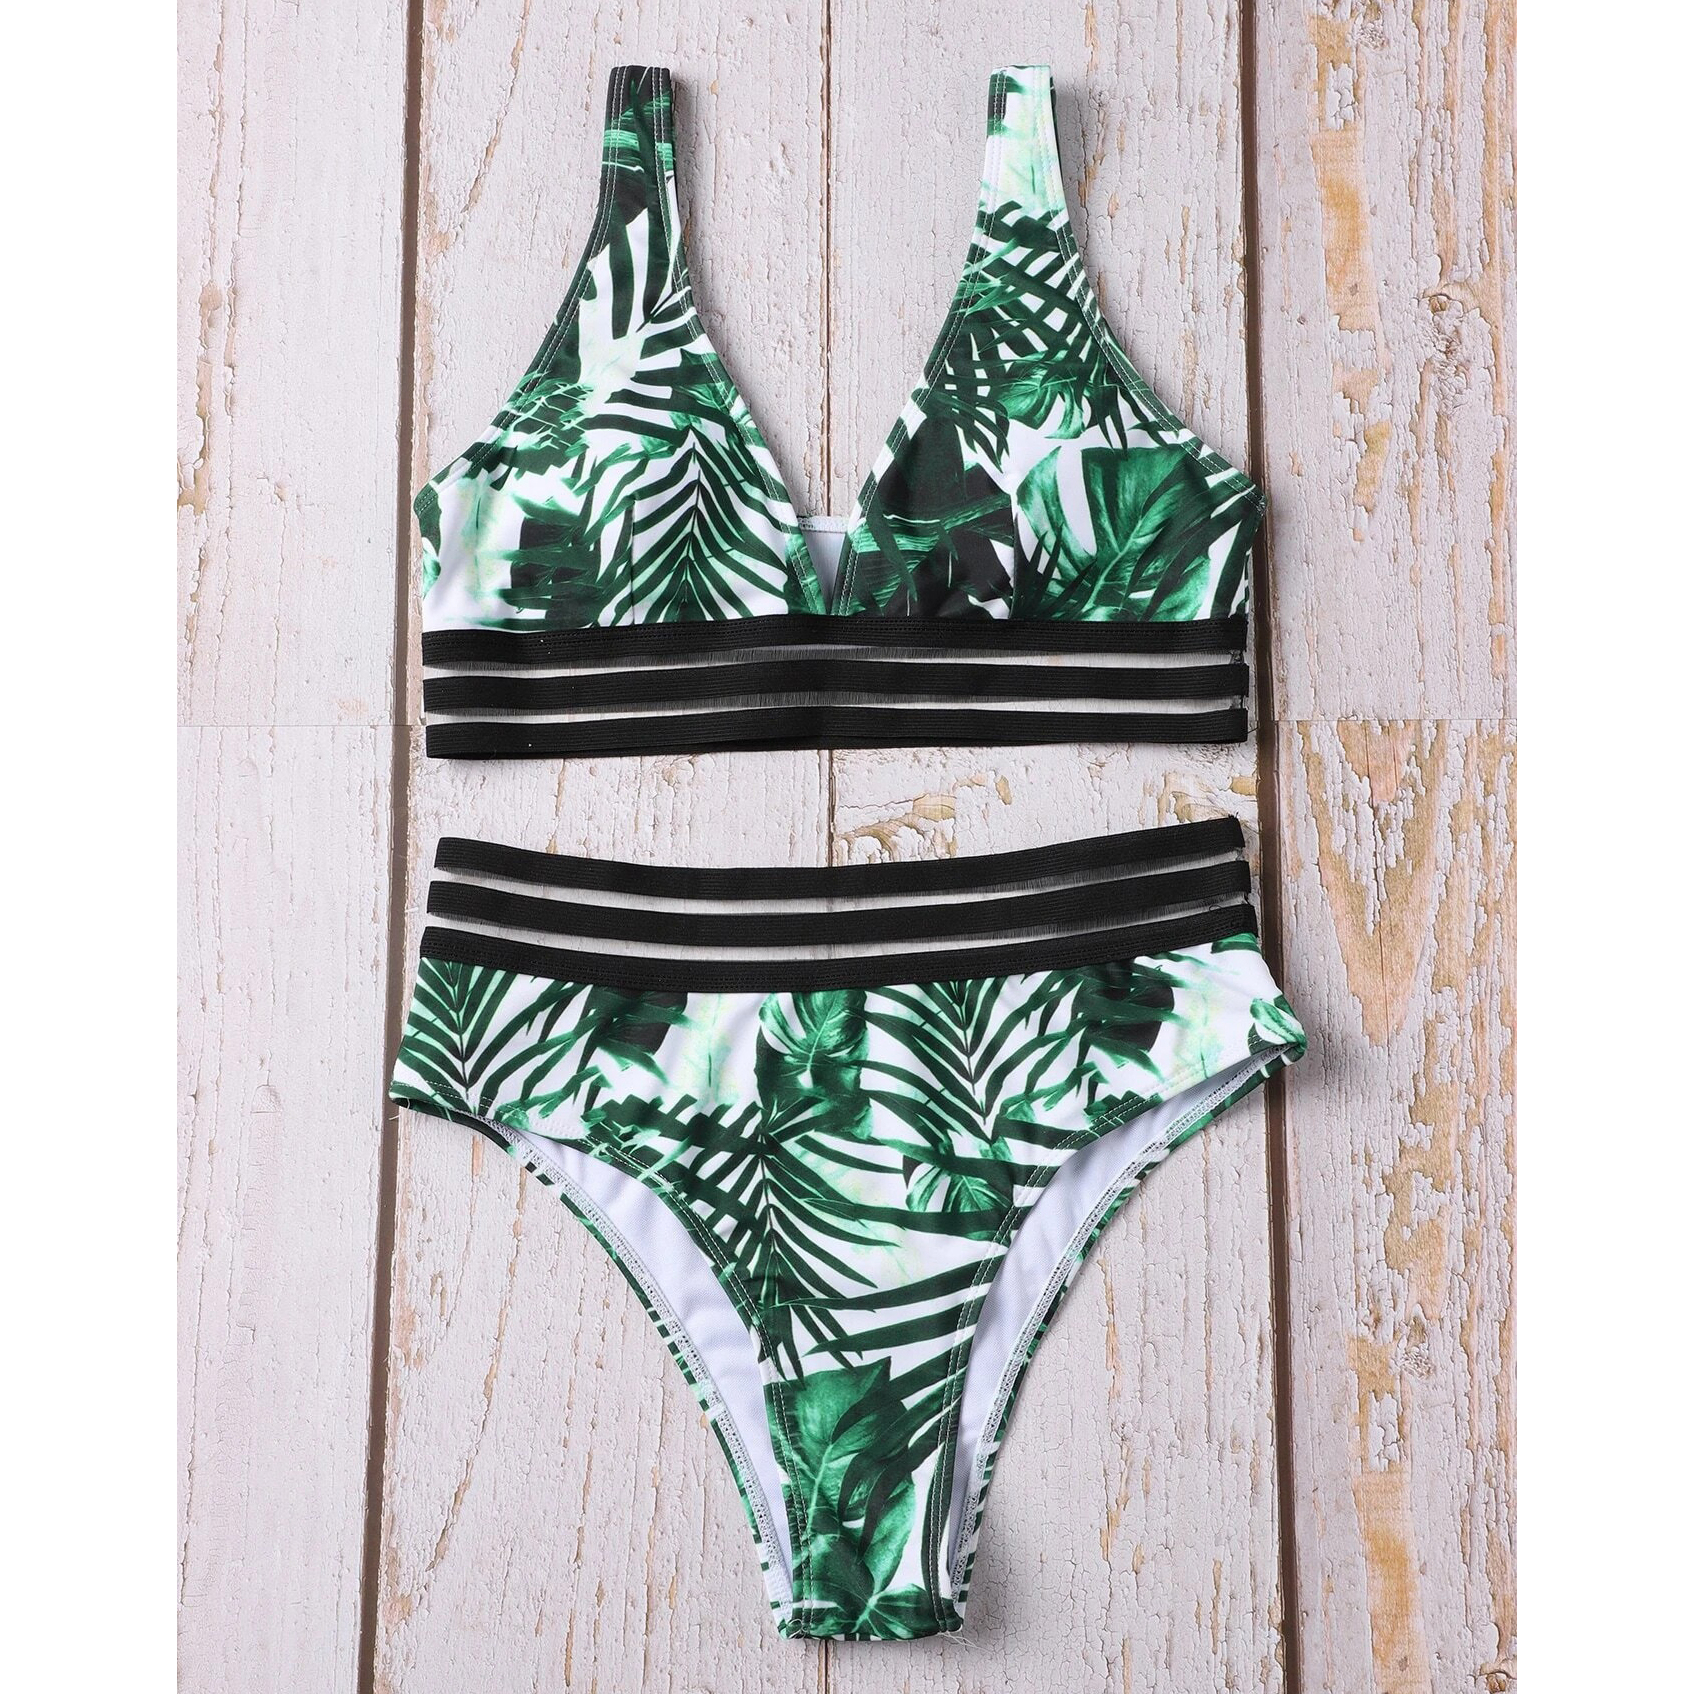 Tropical High Waisted Bikini Swimsuit - S